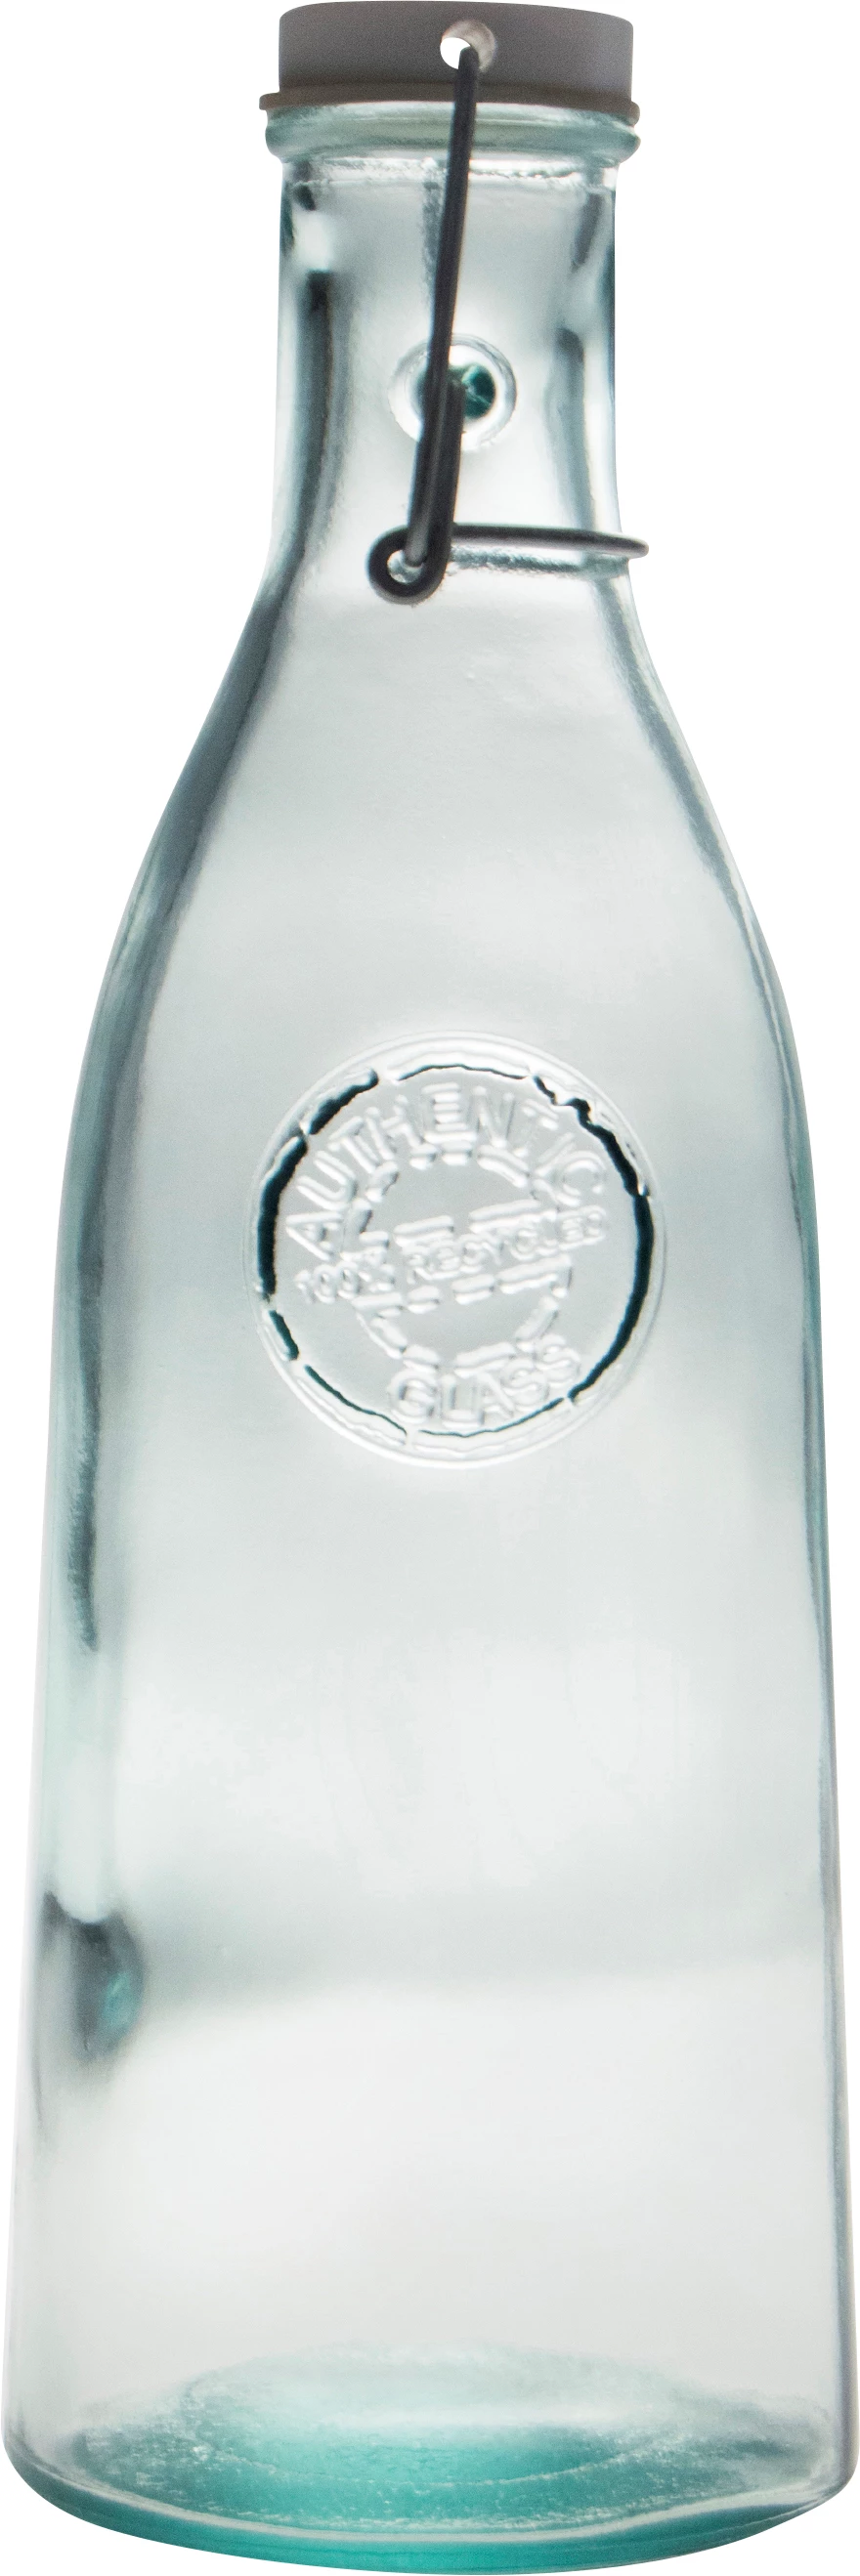 San Miguel Natural Water Authentic patentflaske, 1 ltr.